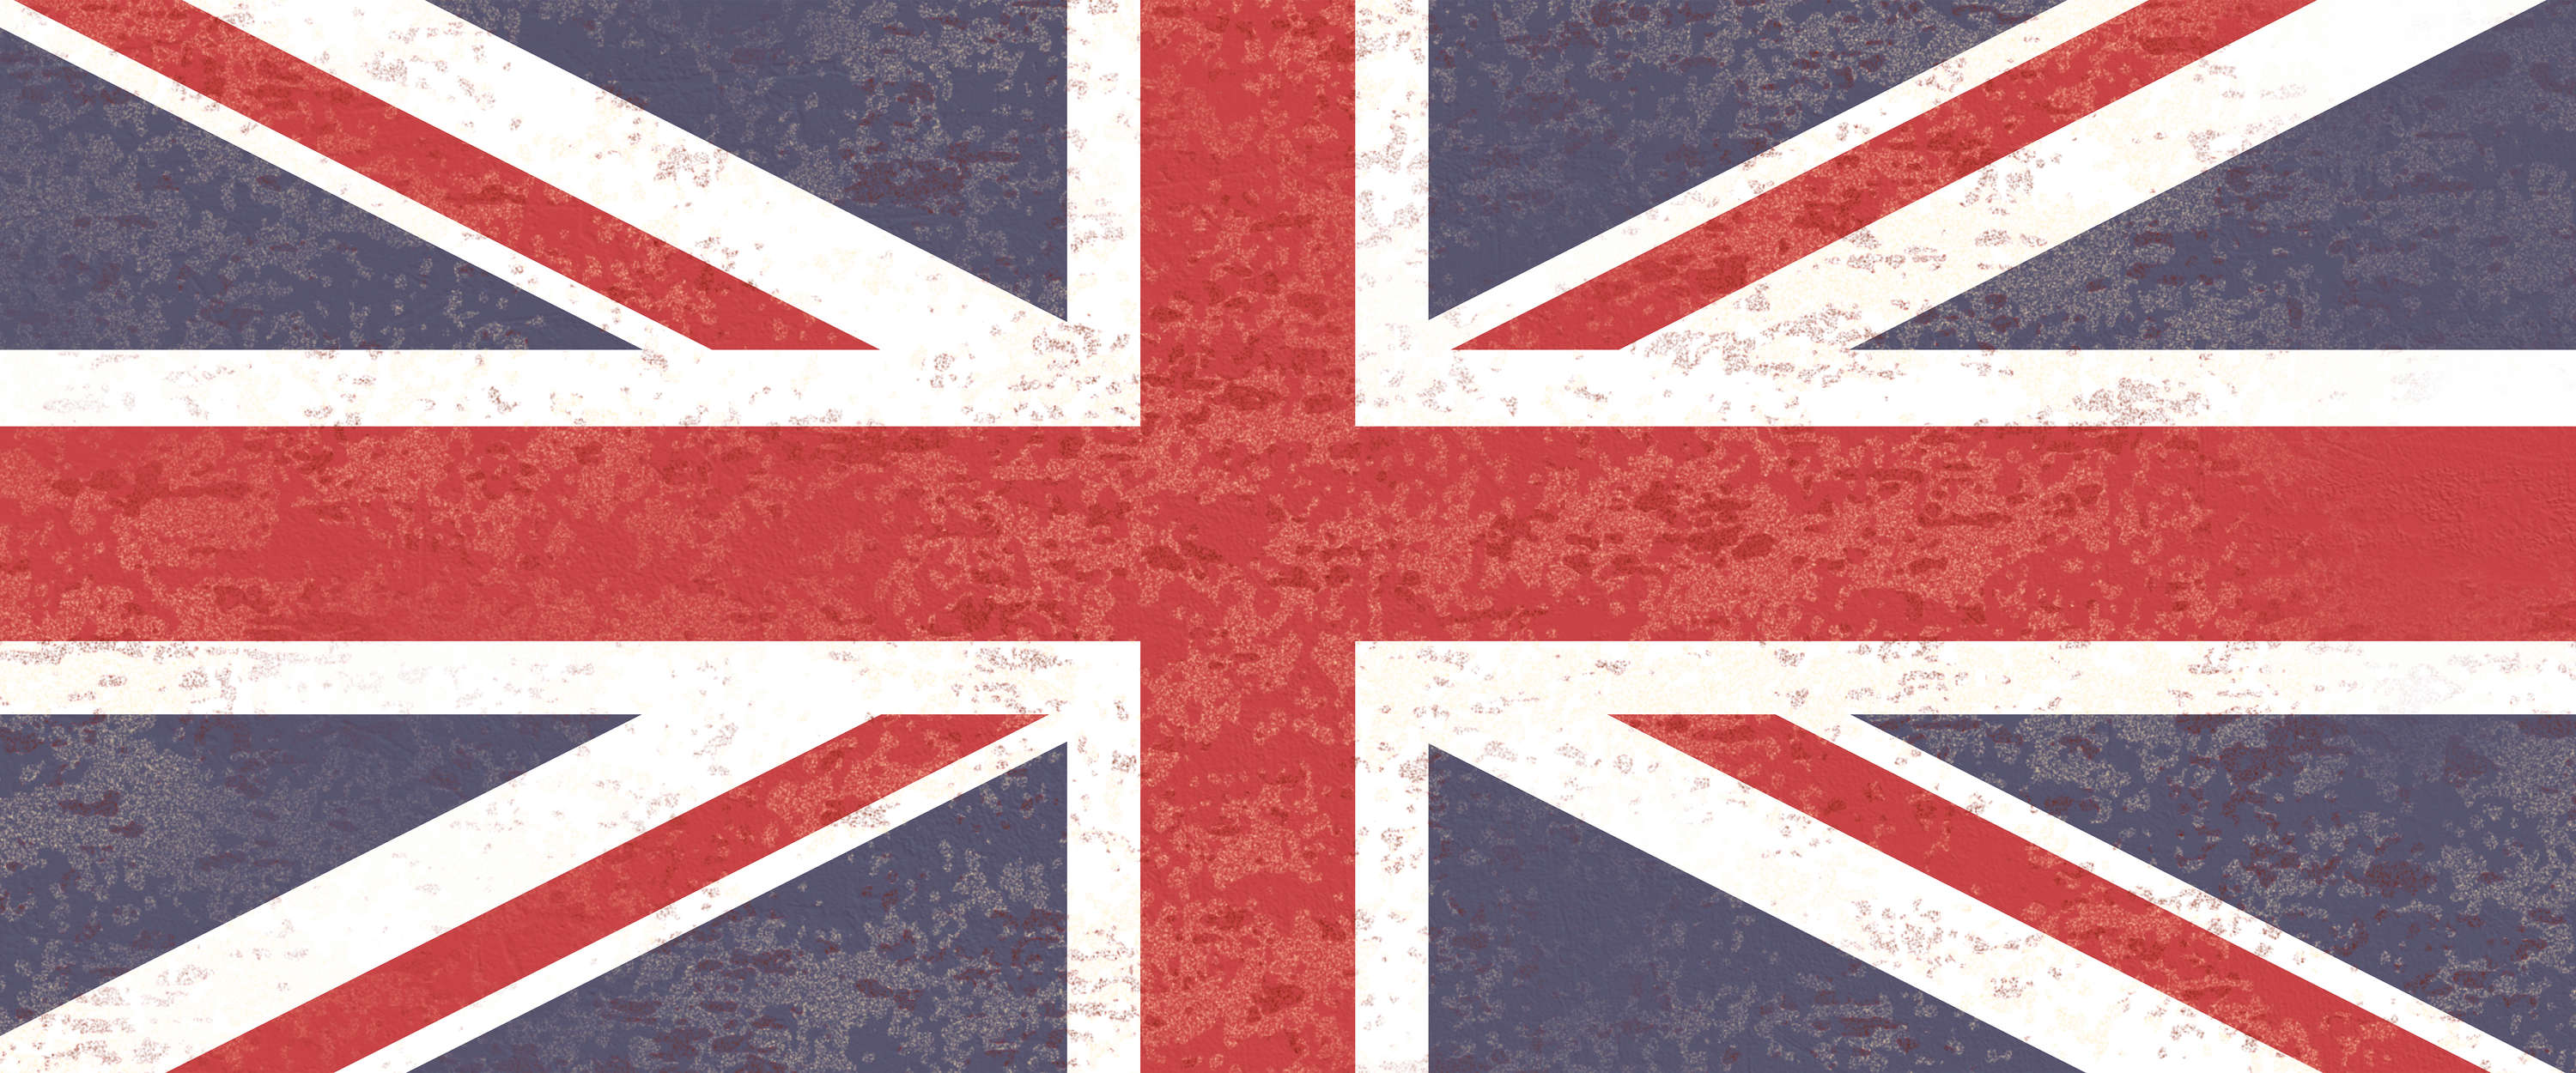             Fotomurali tinta unicaon Jack - Bandiera della Gran Bretagna
        